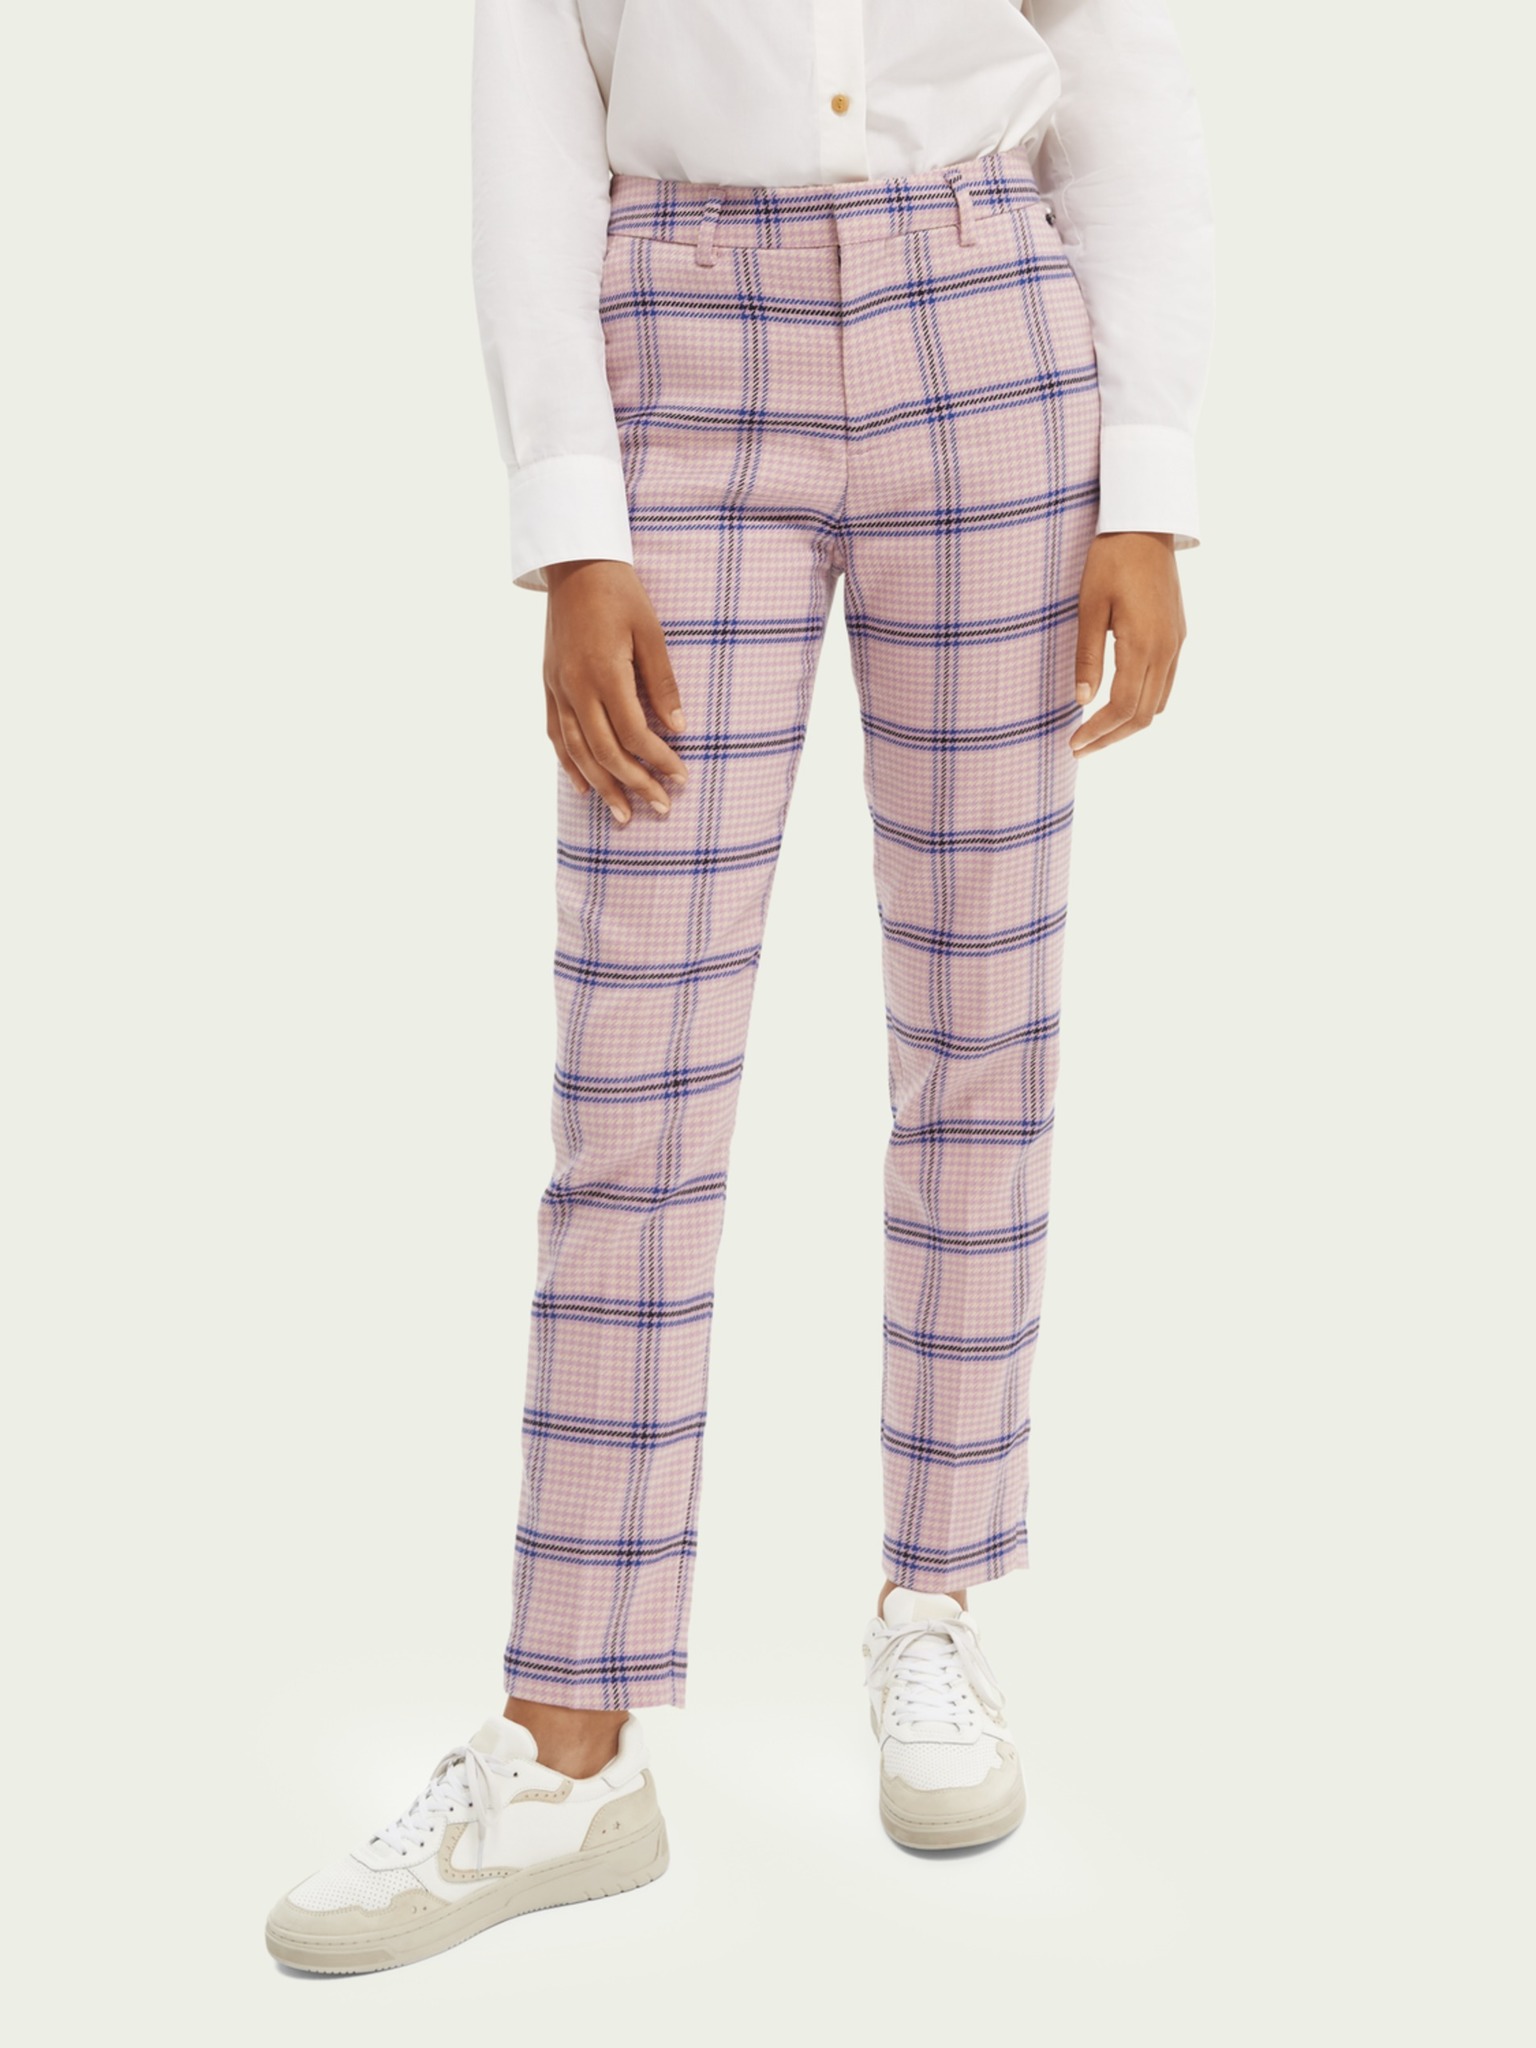 Men's Scotch Plaid Flannel Sleep Pants | Sleepwear at L.L.Bean